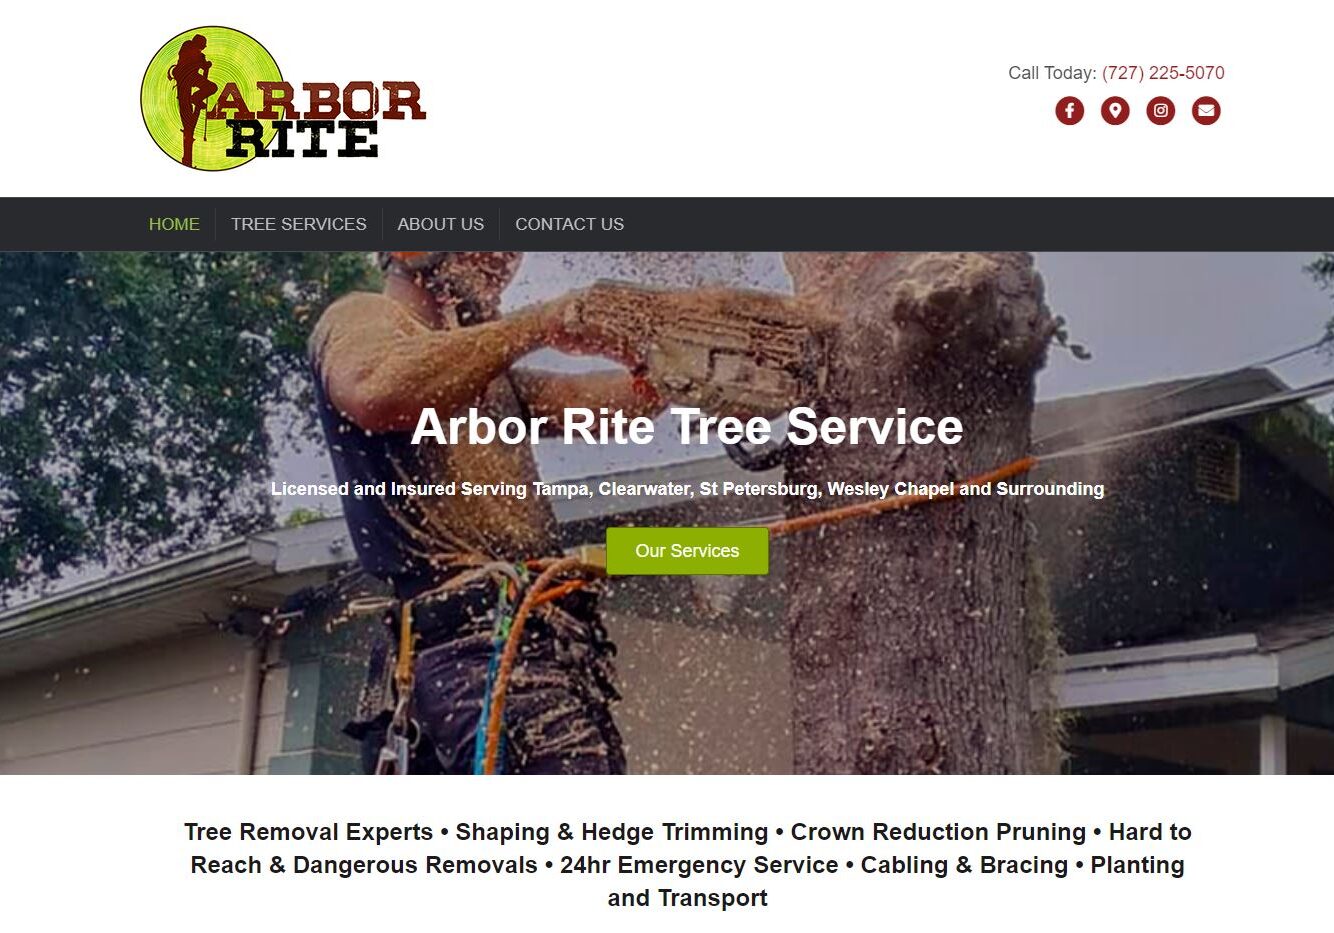 Arbor Rite Tree service